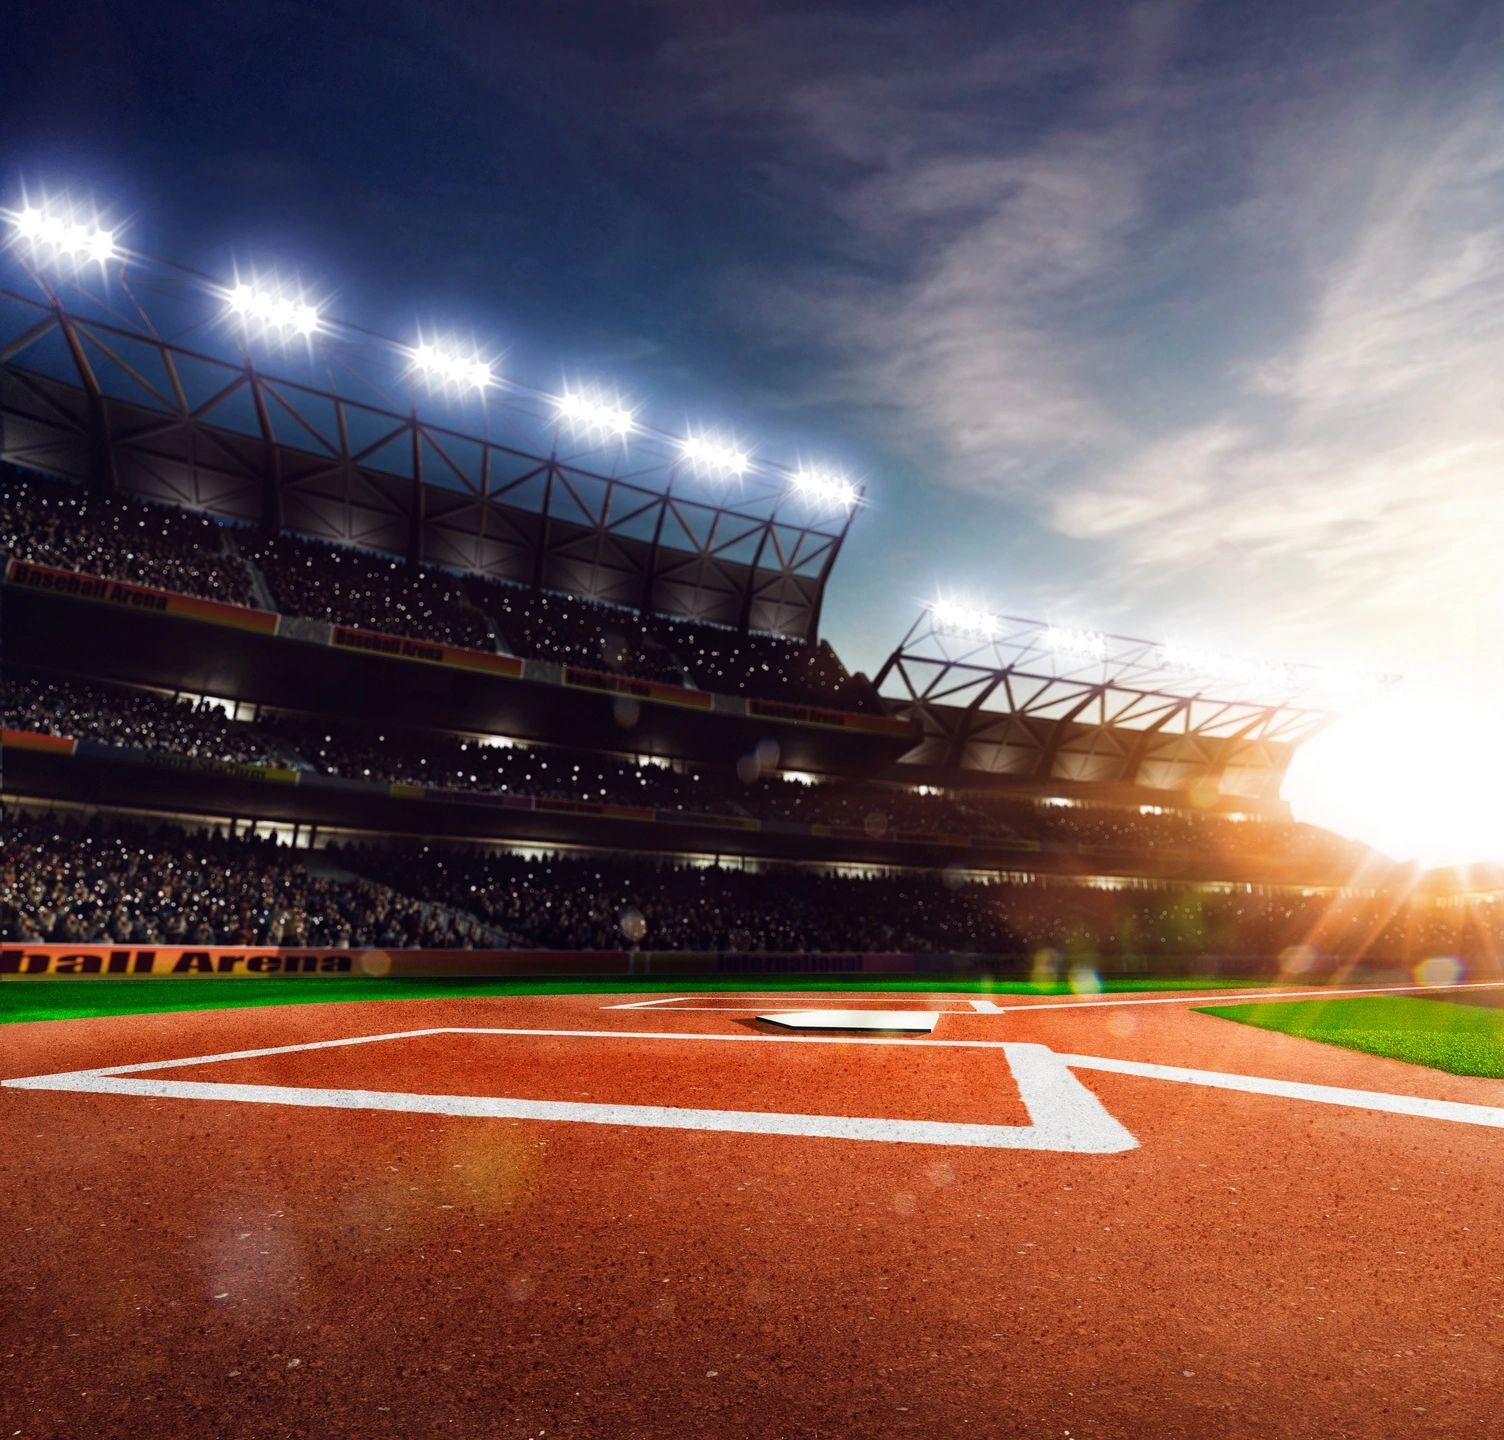 Baseball Night at Chase Field – Tuesday, June 4th